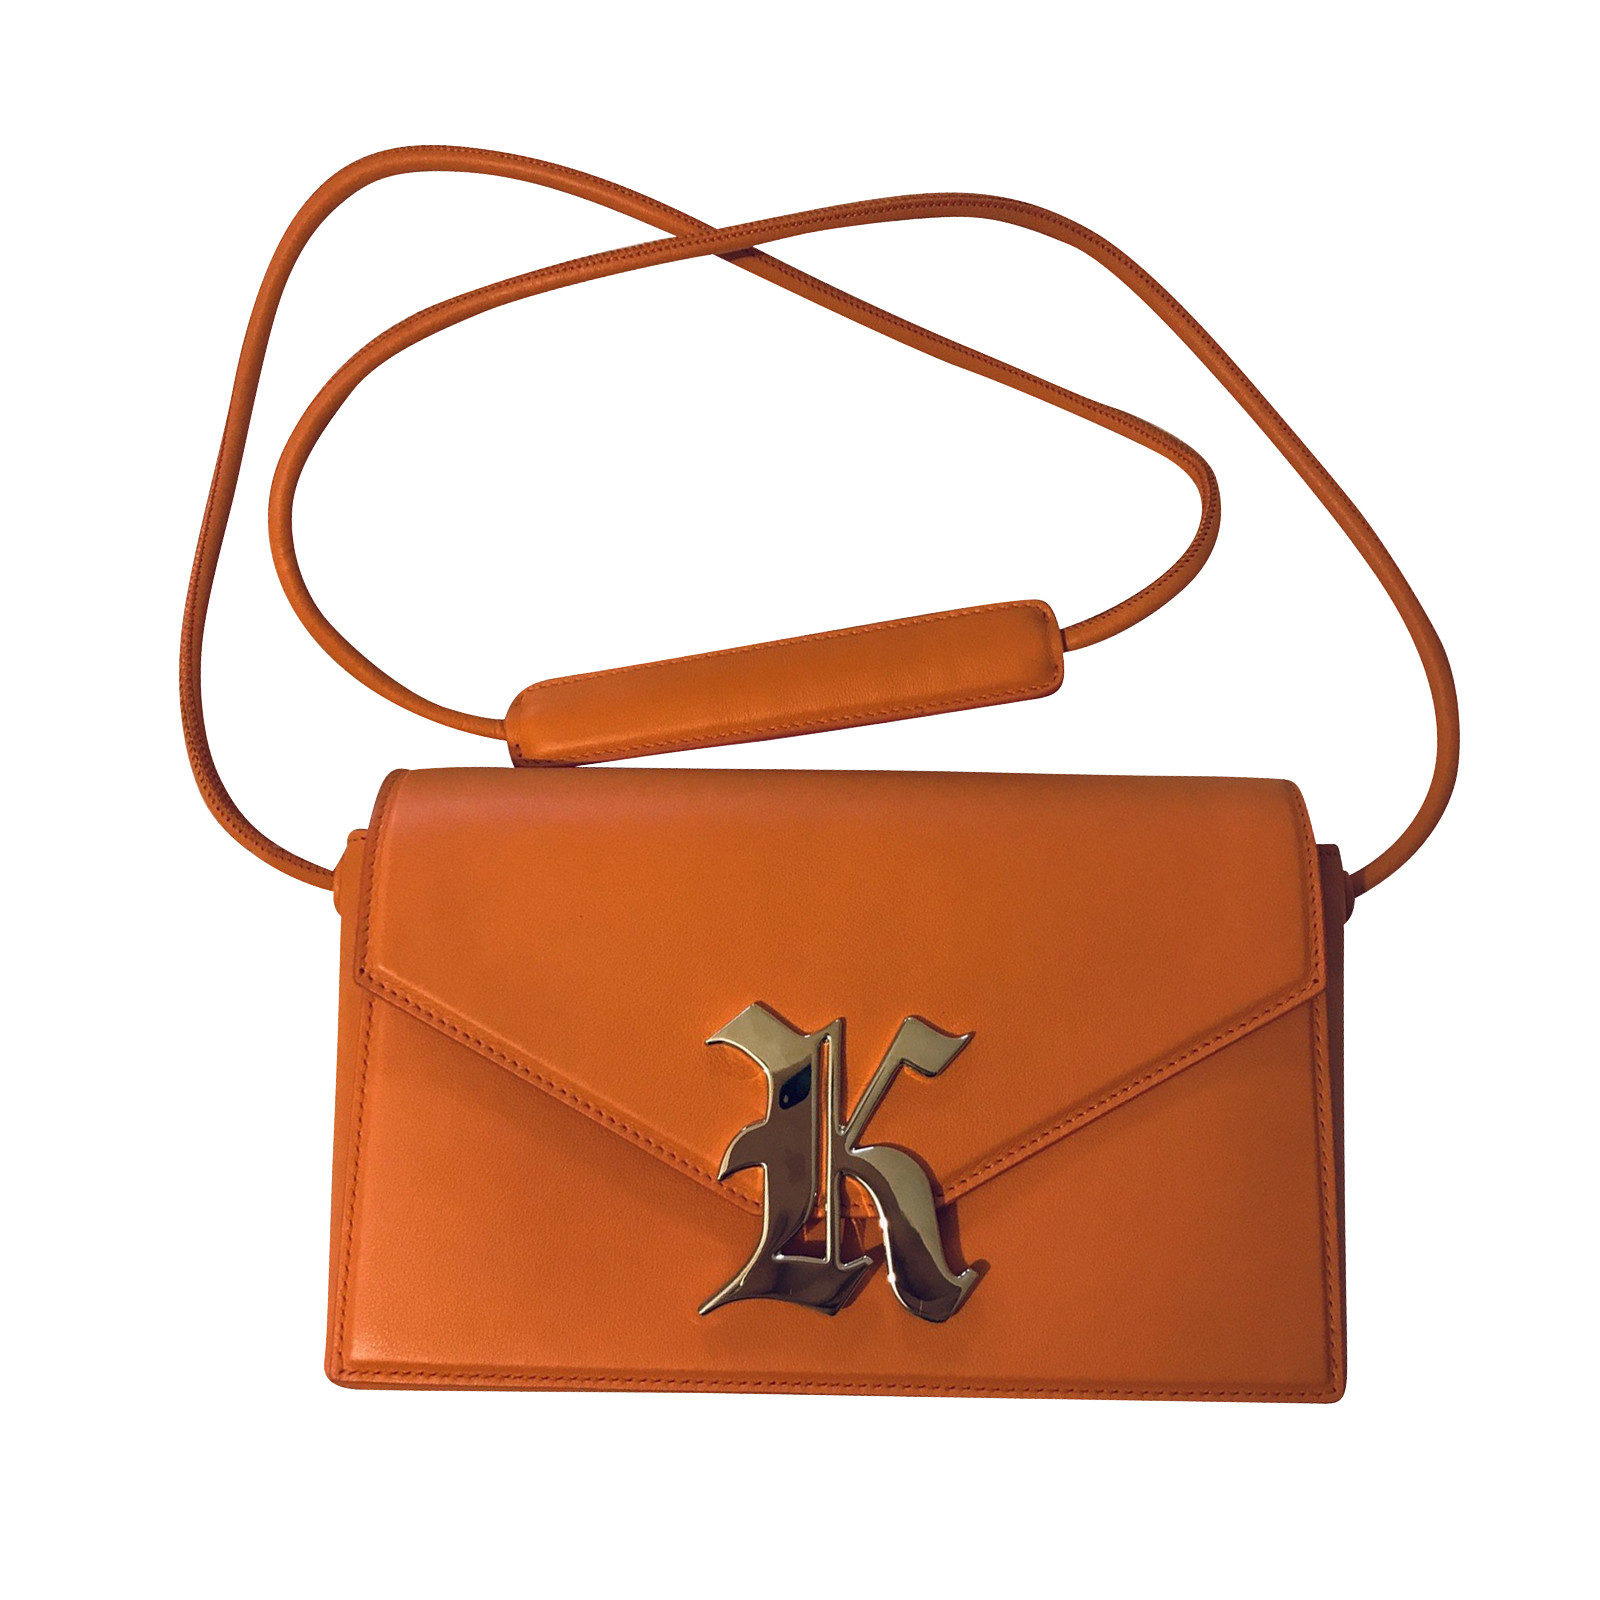 CHRISTOPHER KANE Women's Clutch Bag Leather in Orange